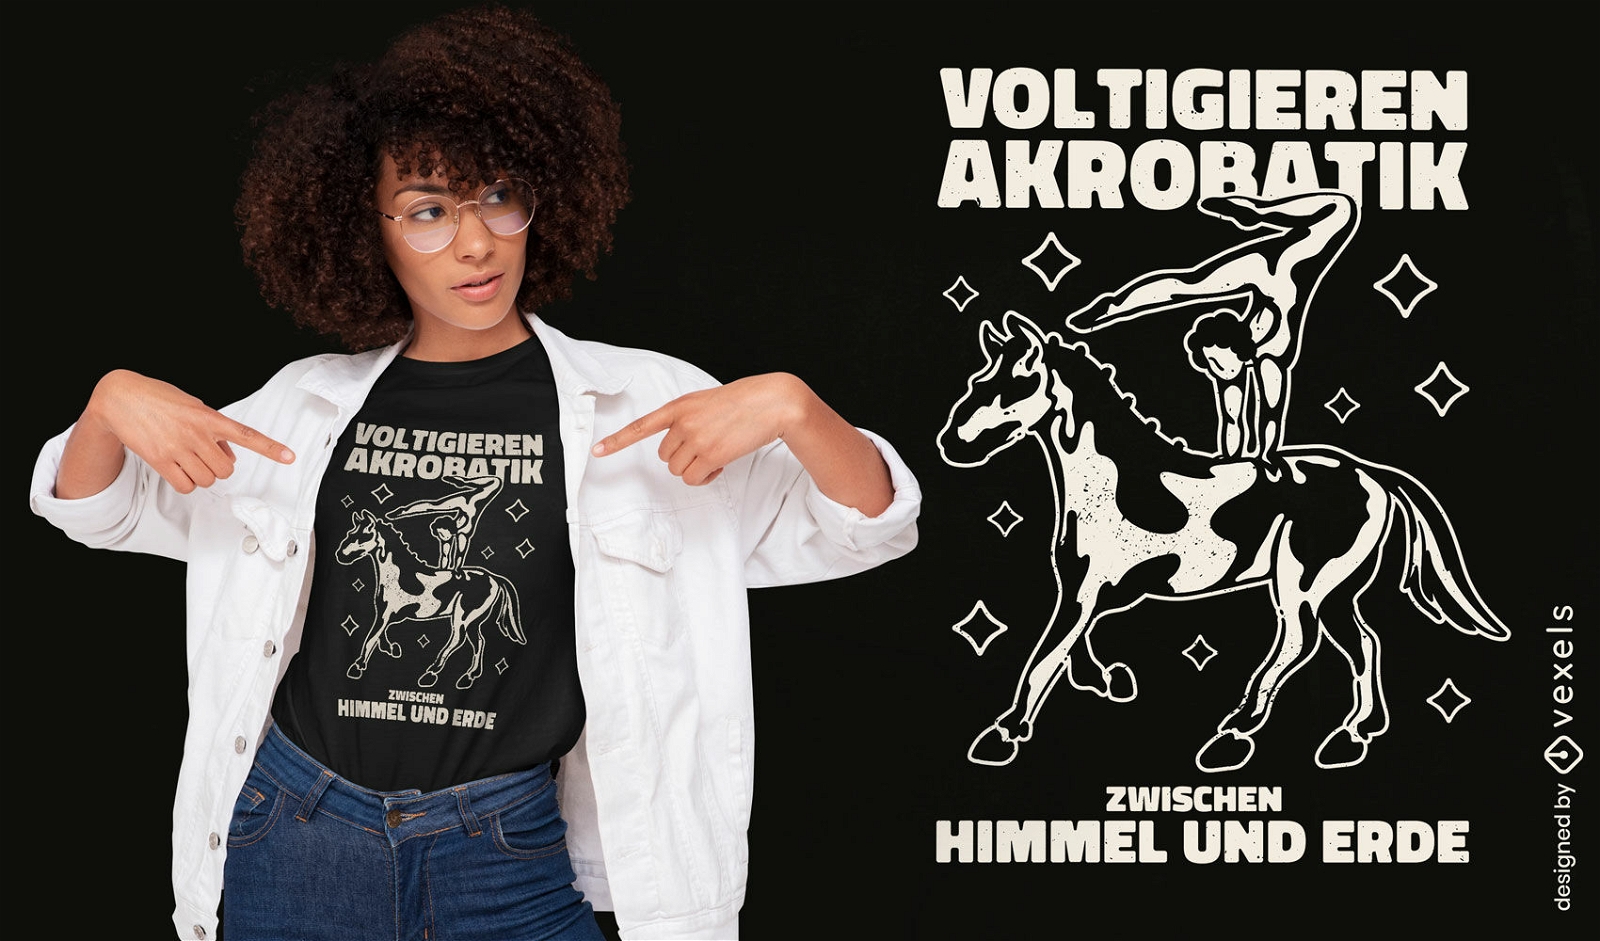 Acrobatic woman on horse t-shirt design